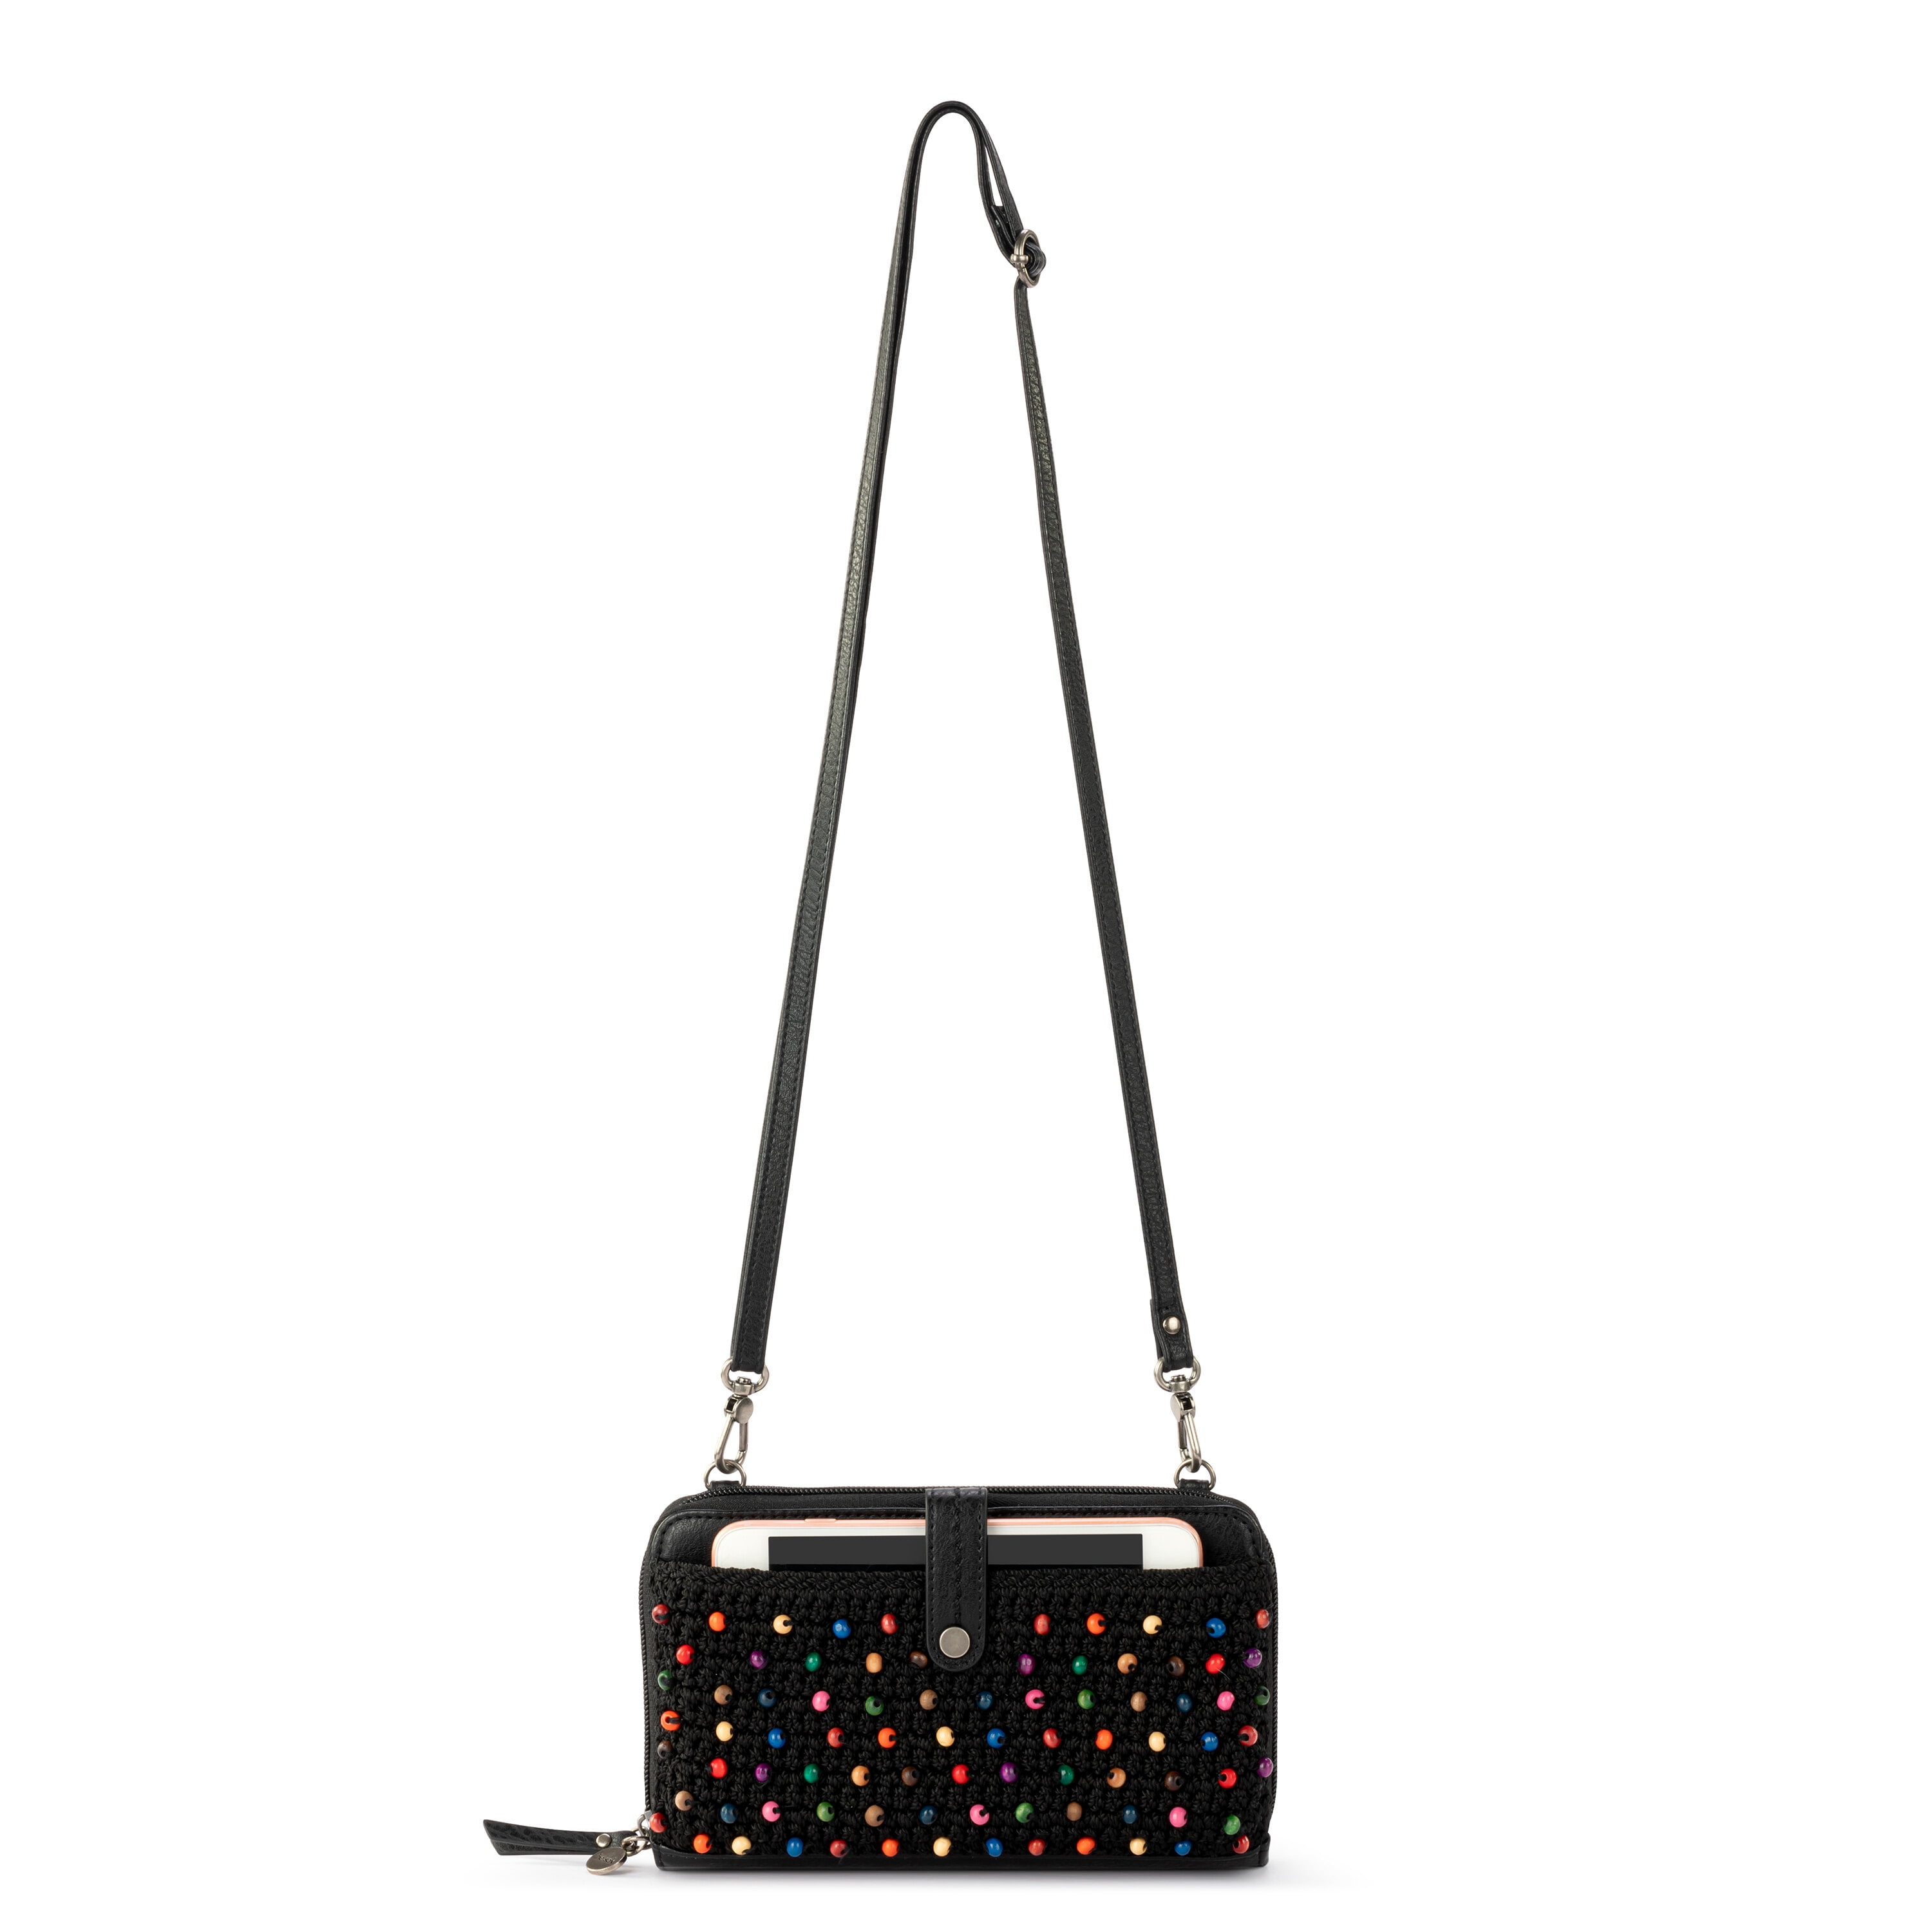 The Sak 90s Purse, Crochet Shoulder Bag Double Handle Tote, Y2K Style Vegan Handbag